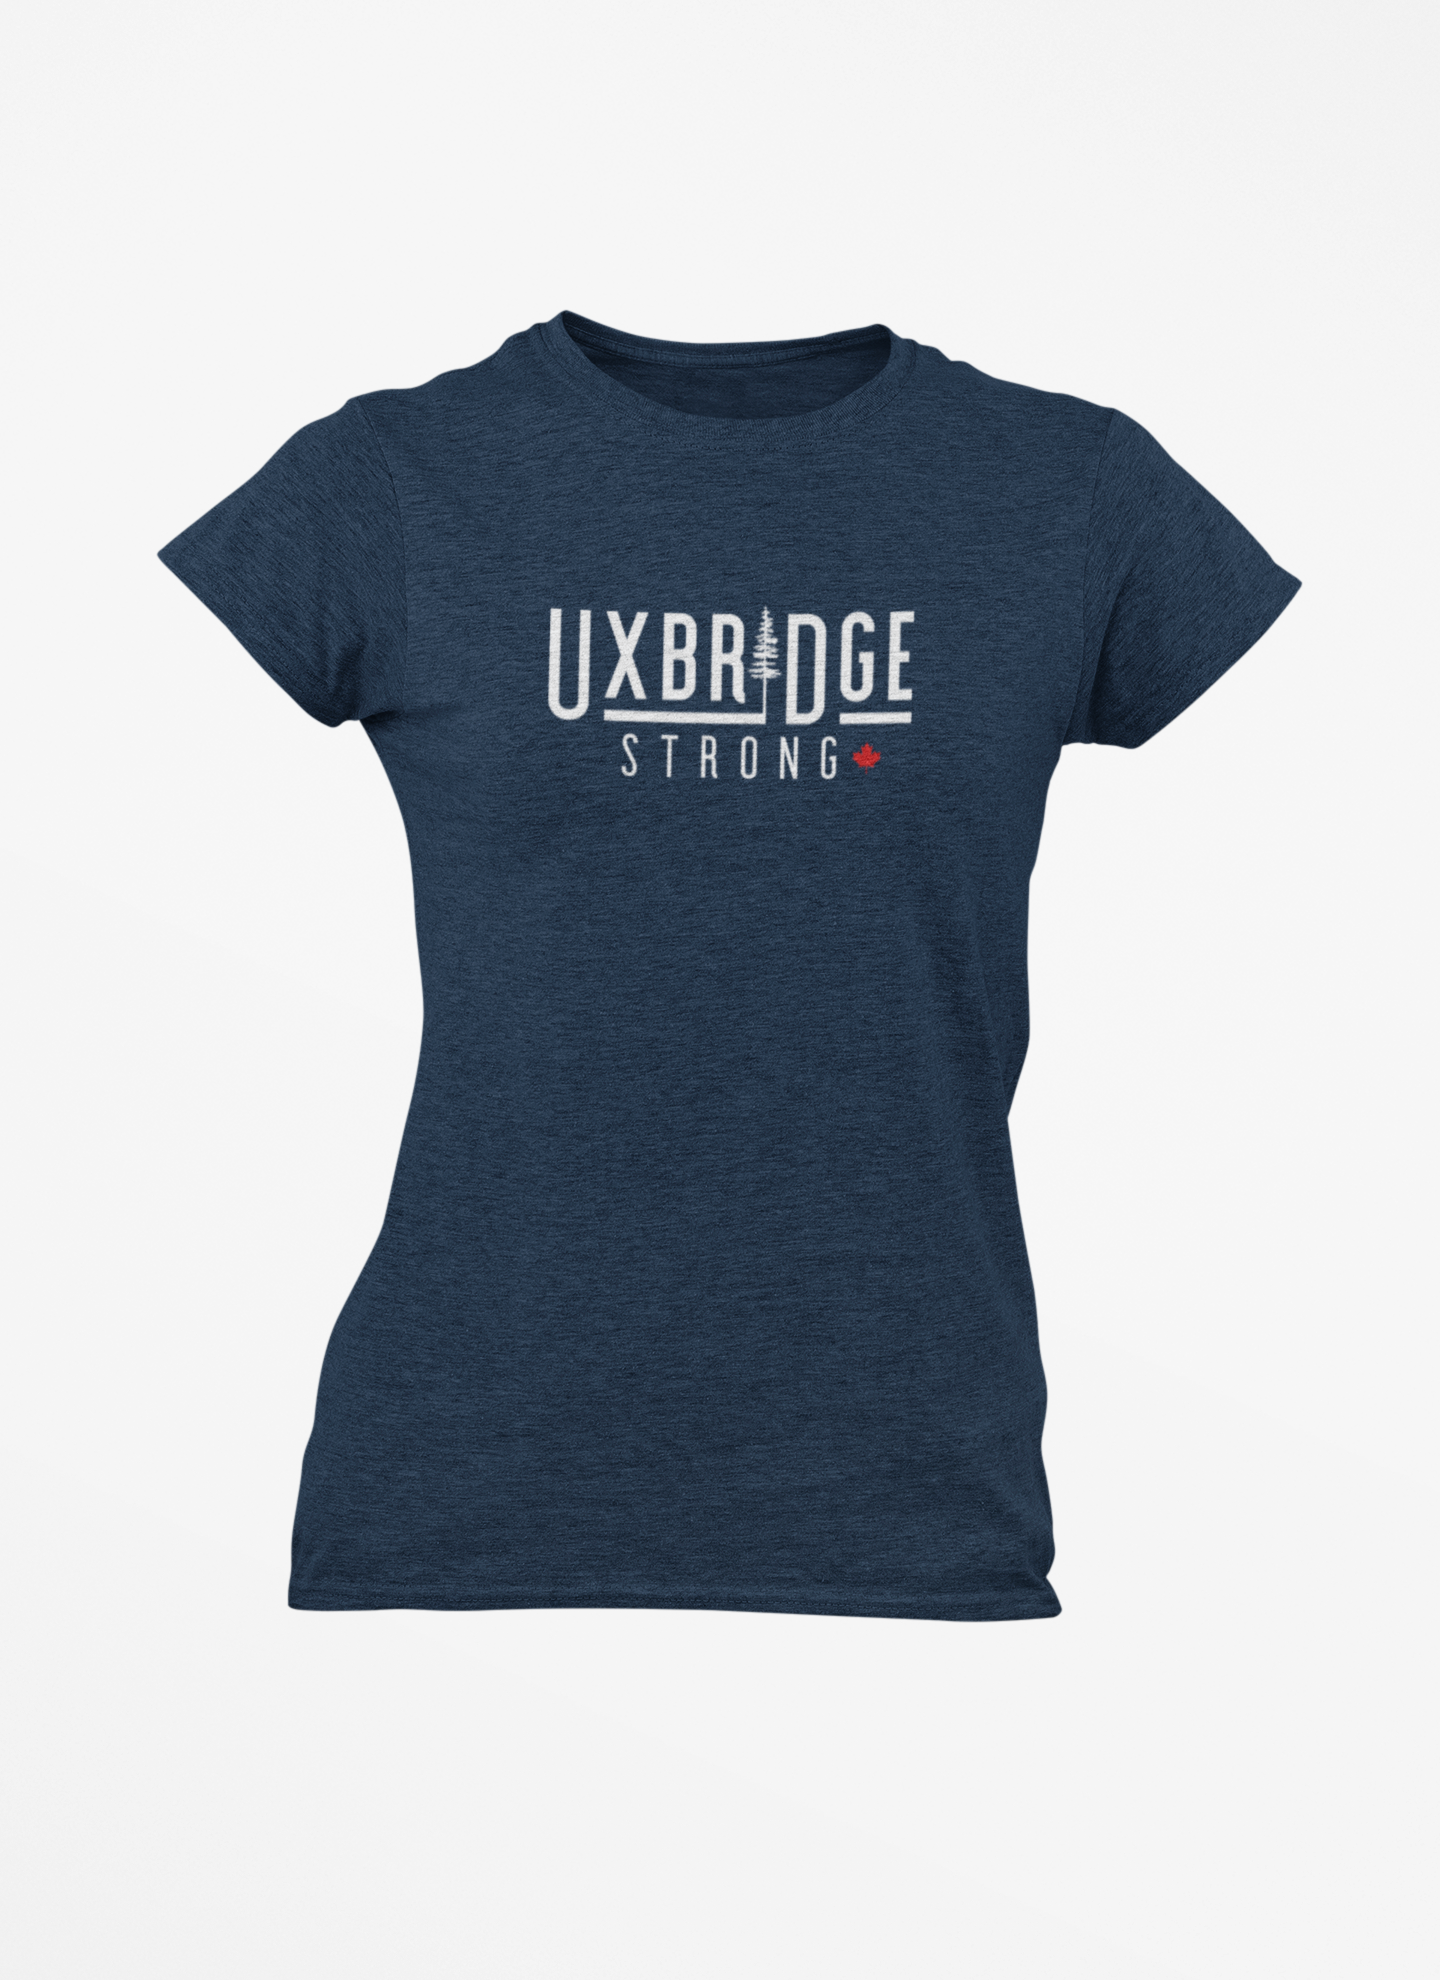 Women's Uxbridge Strong Tree T-Shirt - Fundraising Edition